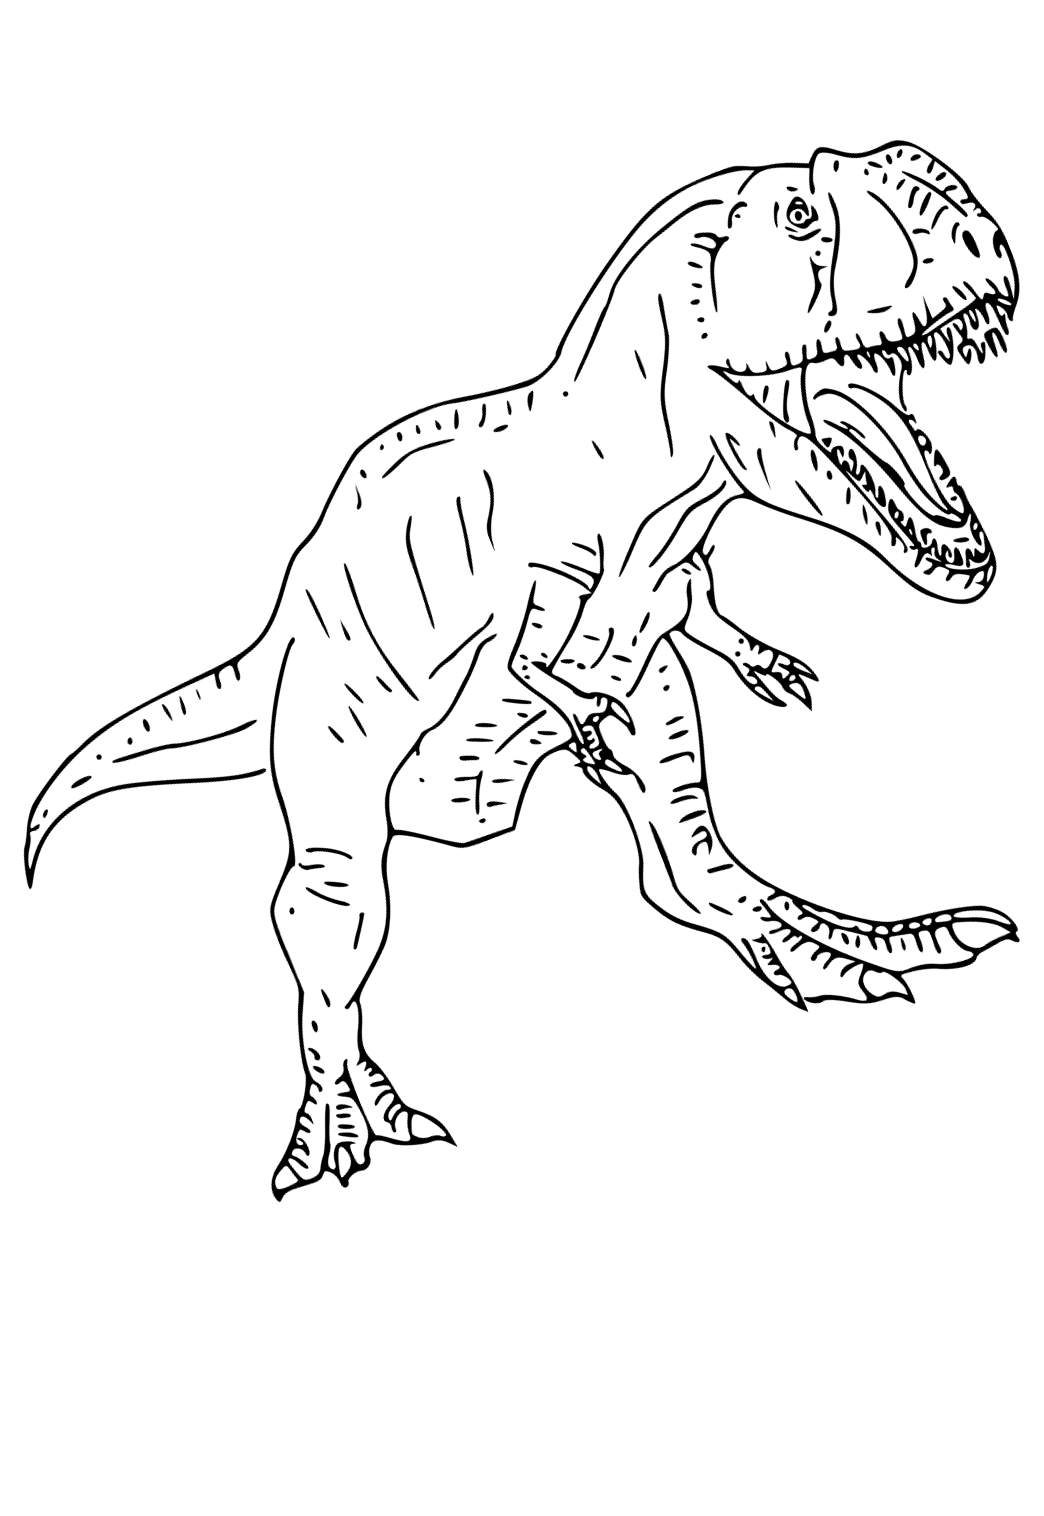 ג'יגנוטוזאורוס